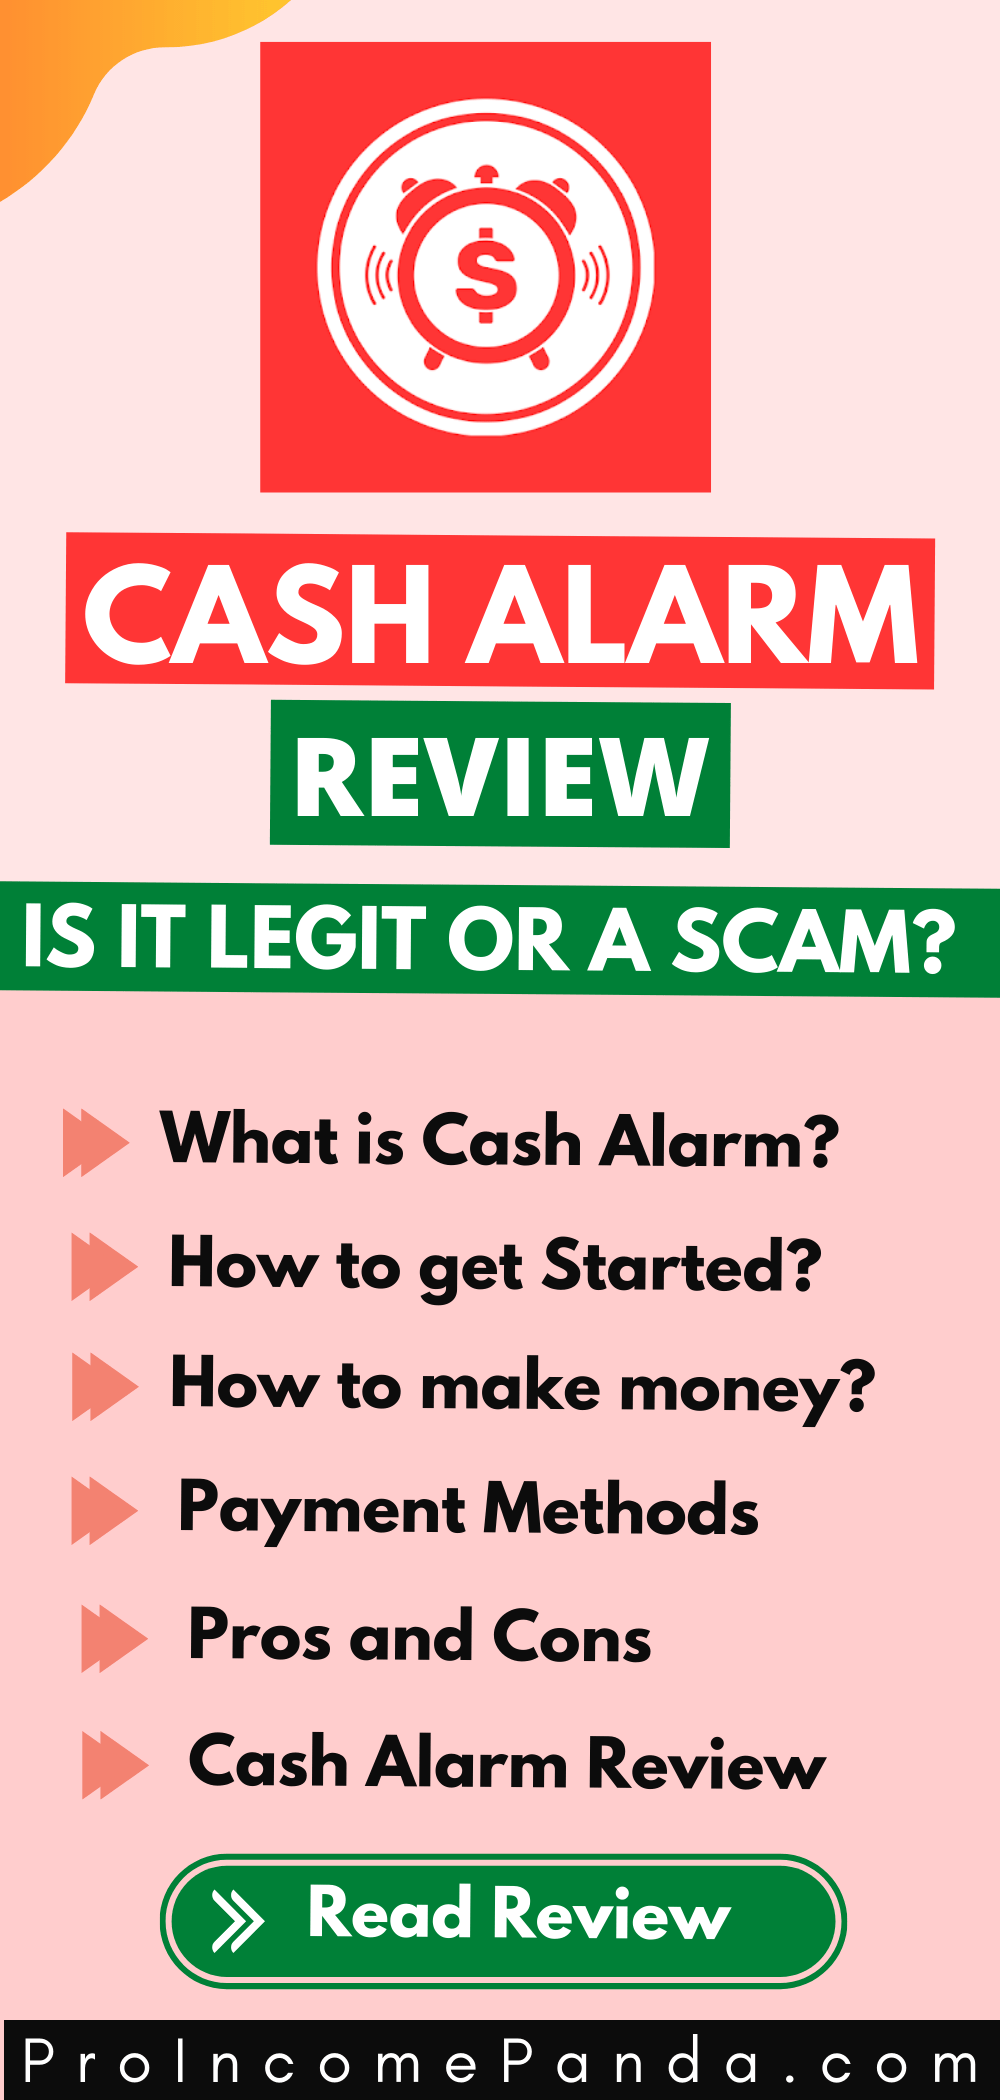 CashAlarm Review